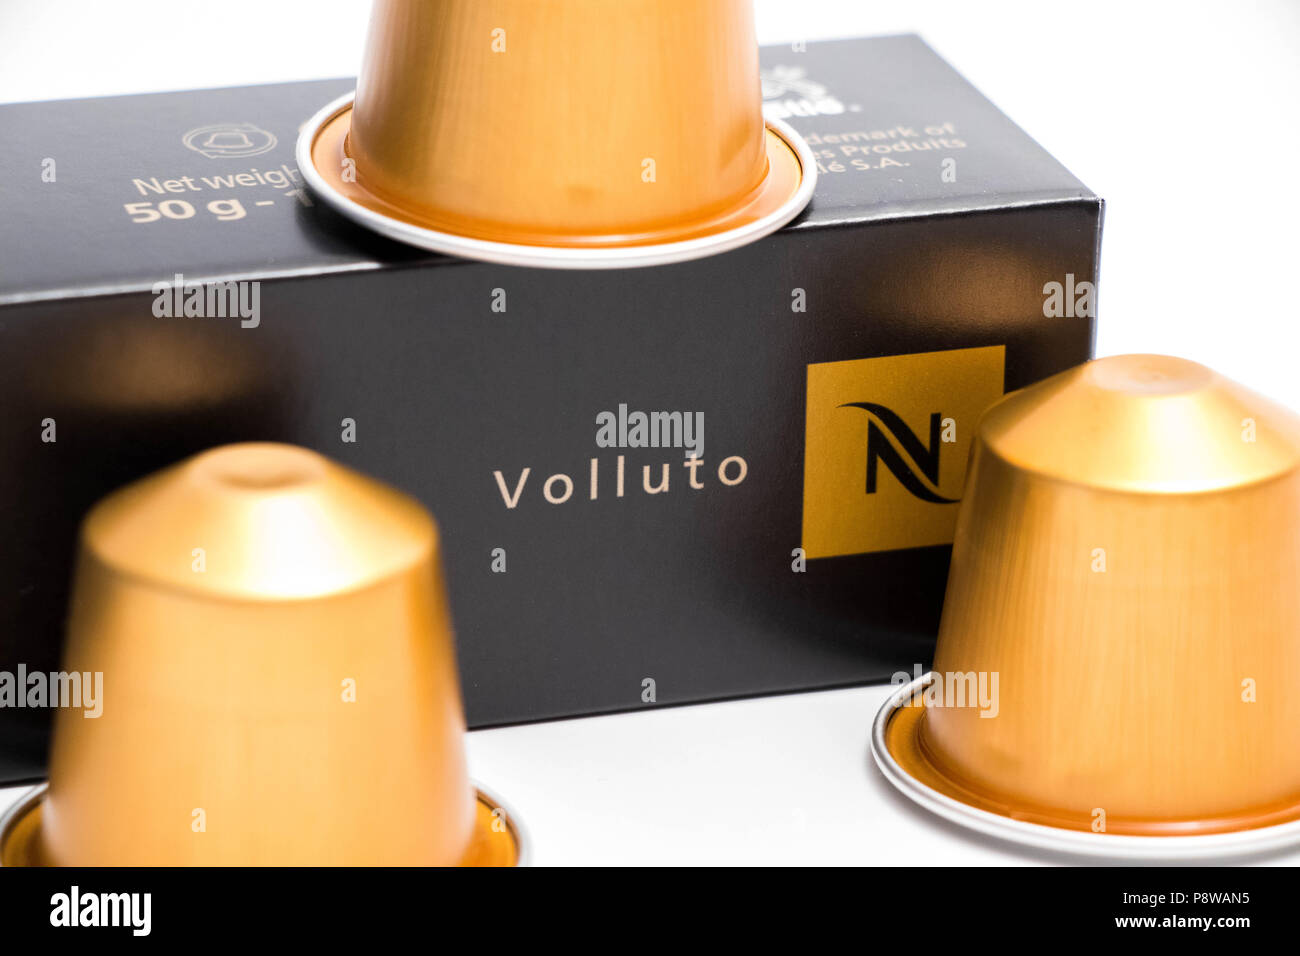 Nespresso Volluto coffee caps Stock Photo - Alamy